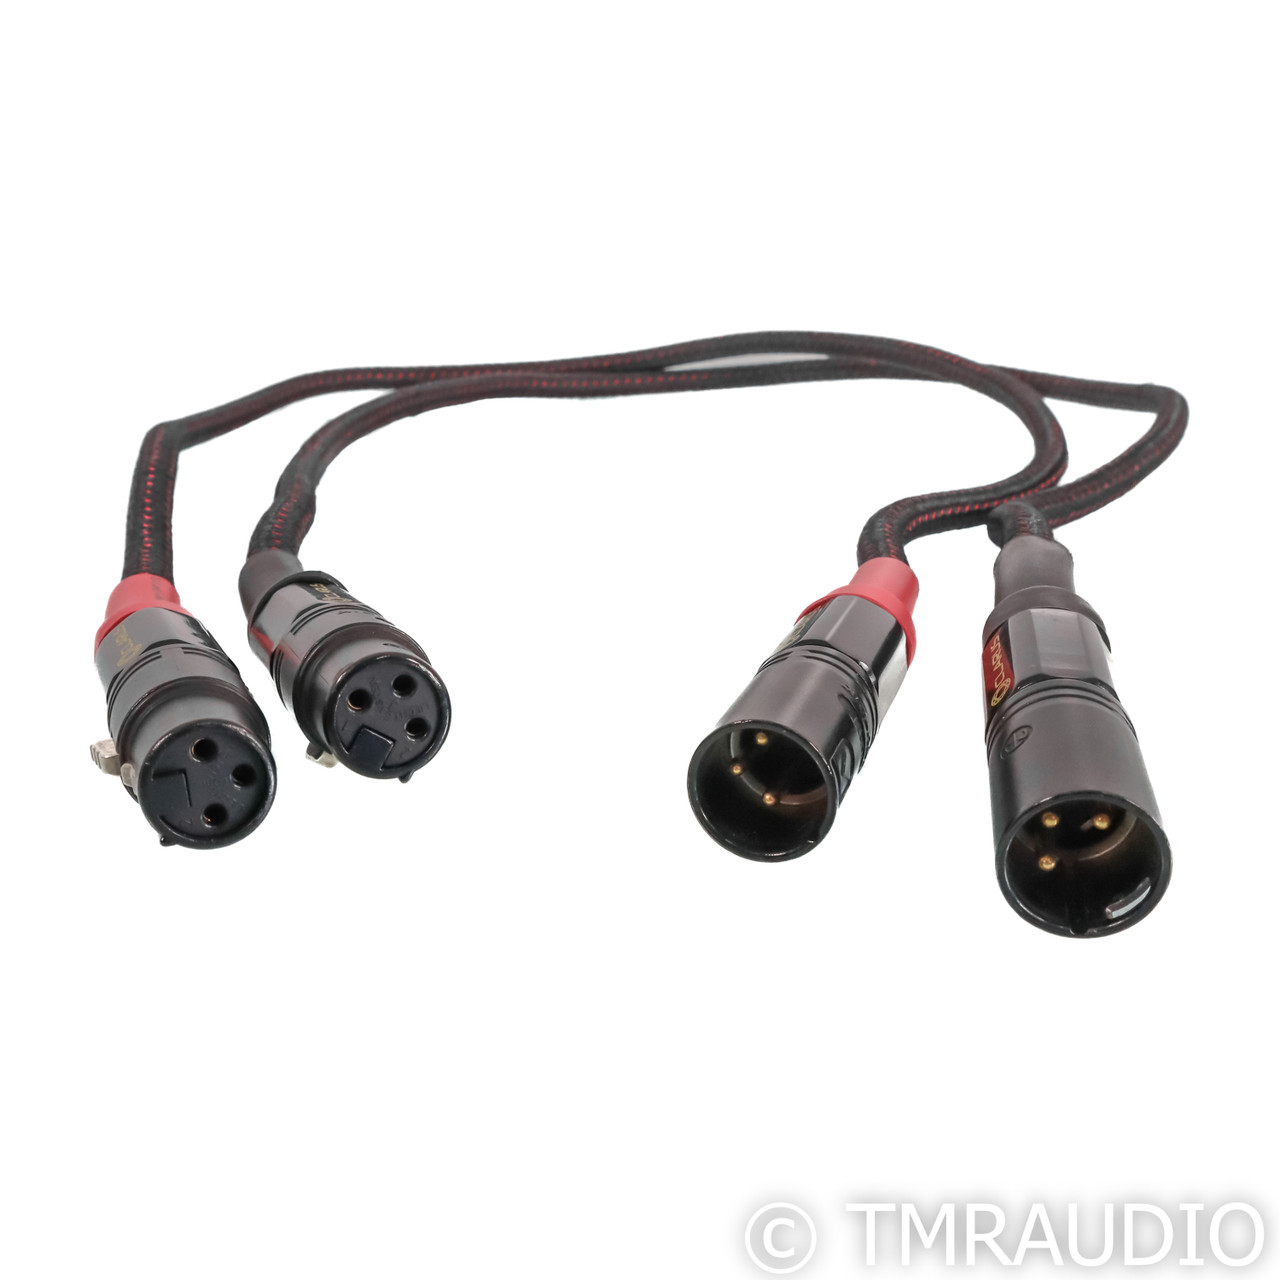 Clarus Cable Crimson XLR Cables; 1m Pair Balanced Inter... 4